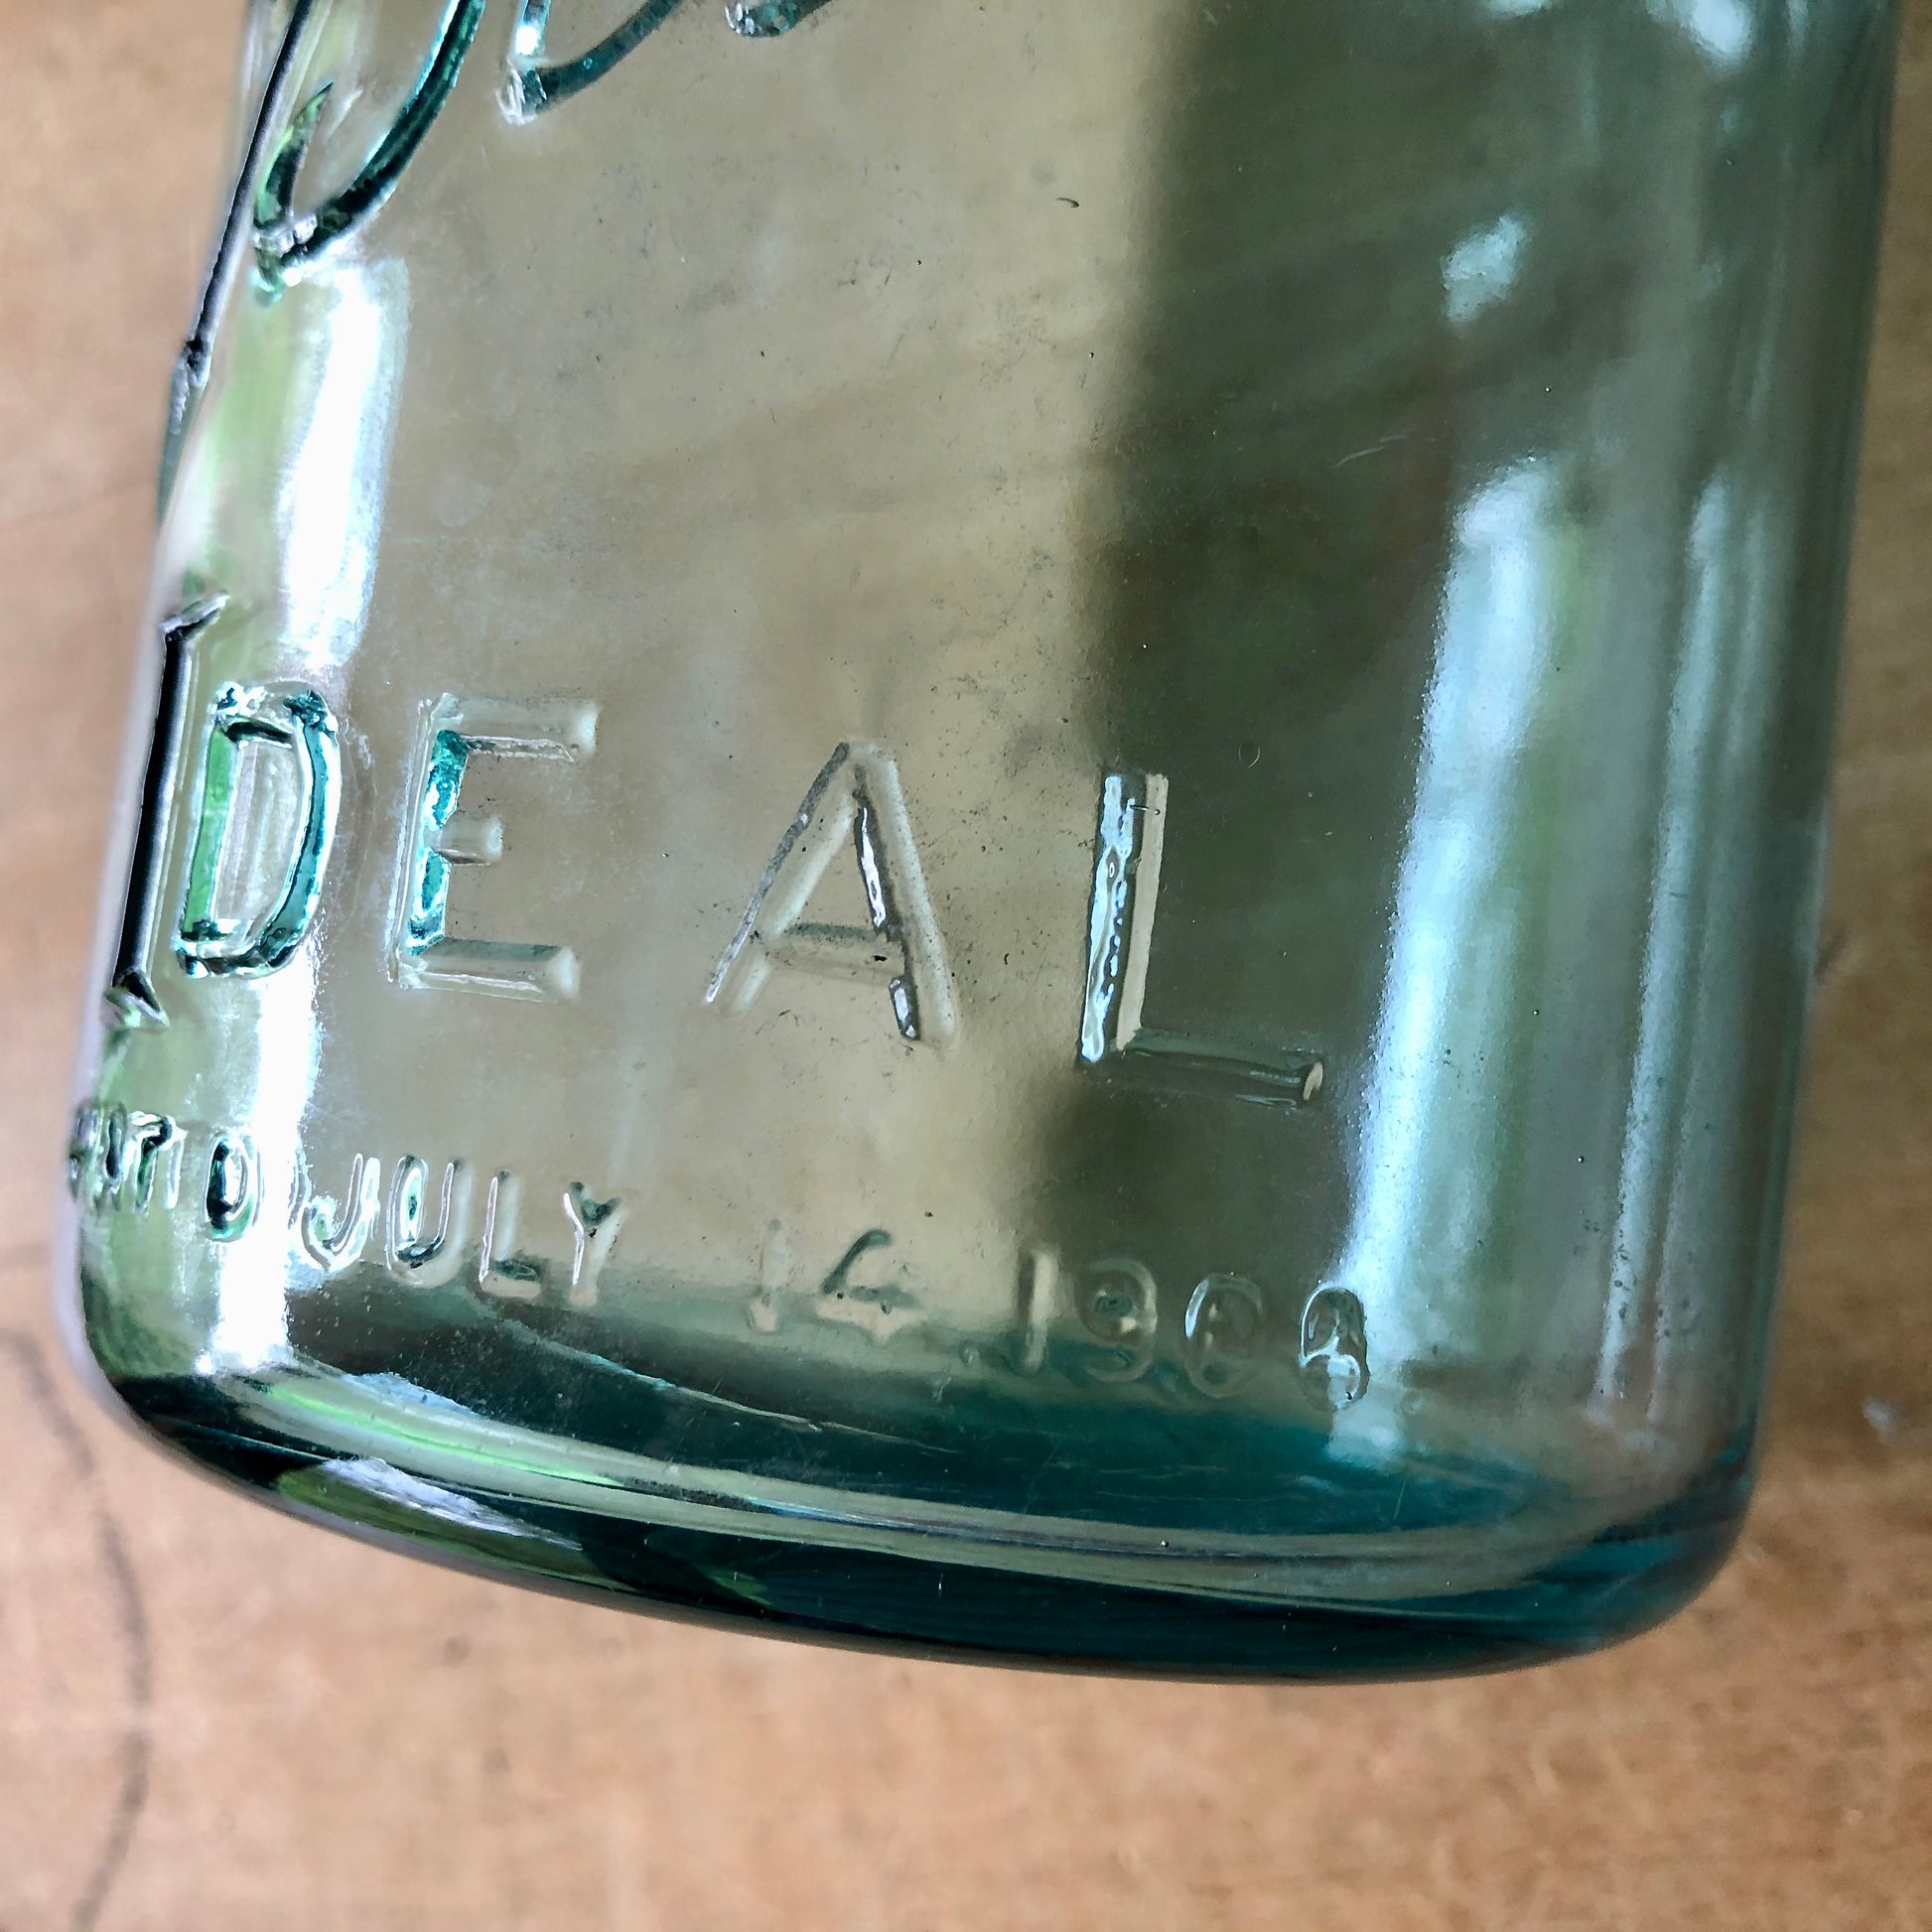 Antique Blue Ball Mason Canning Jars (c.1920s)